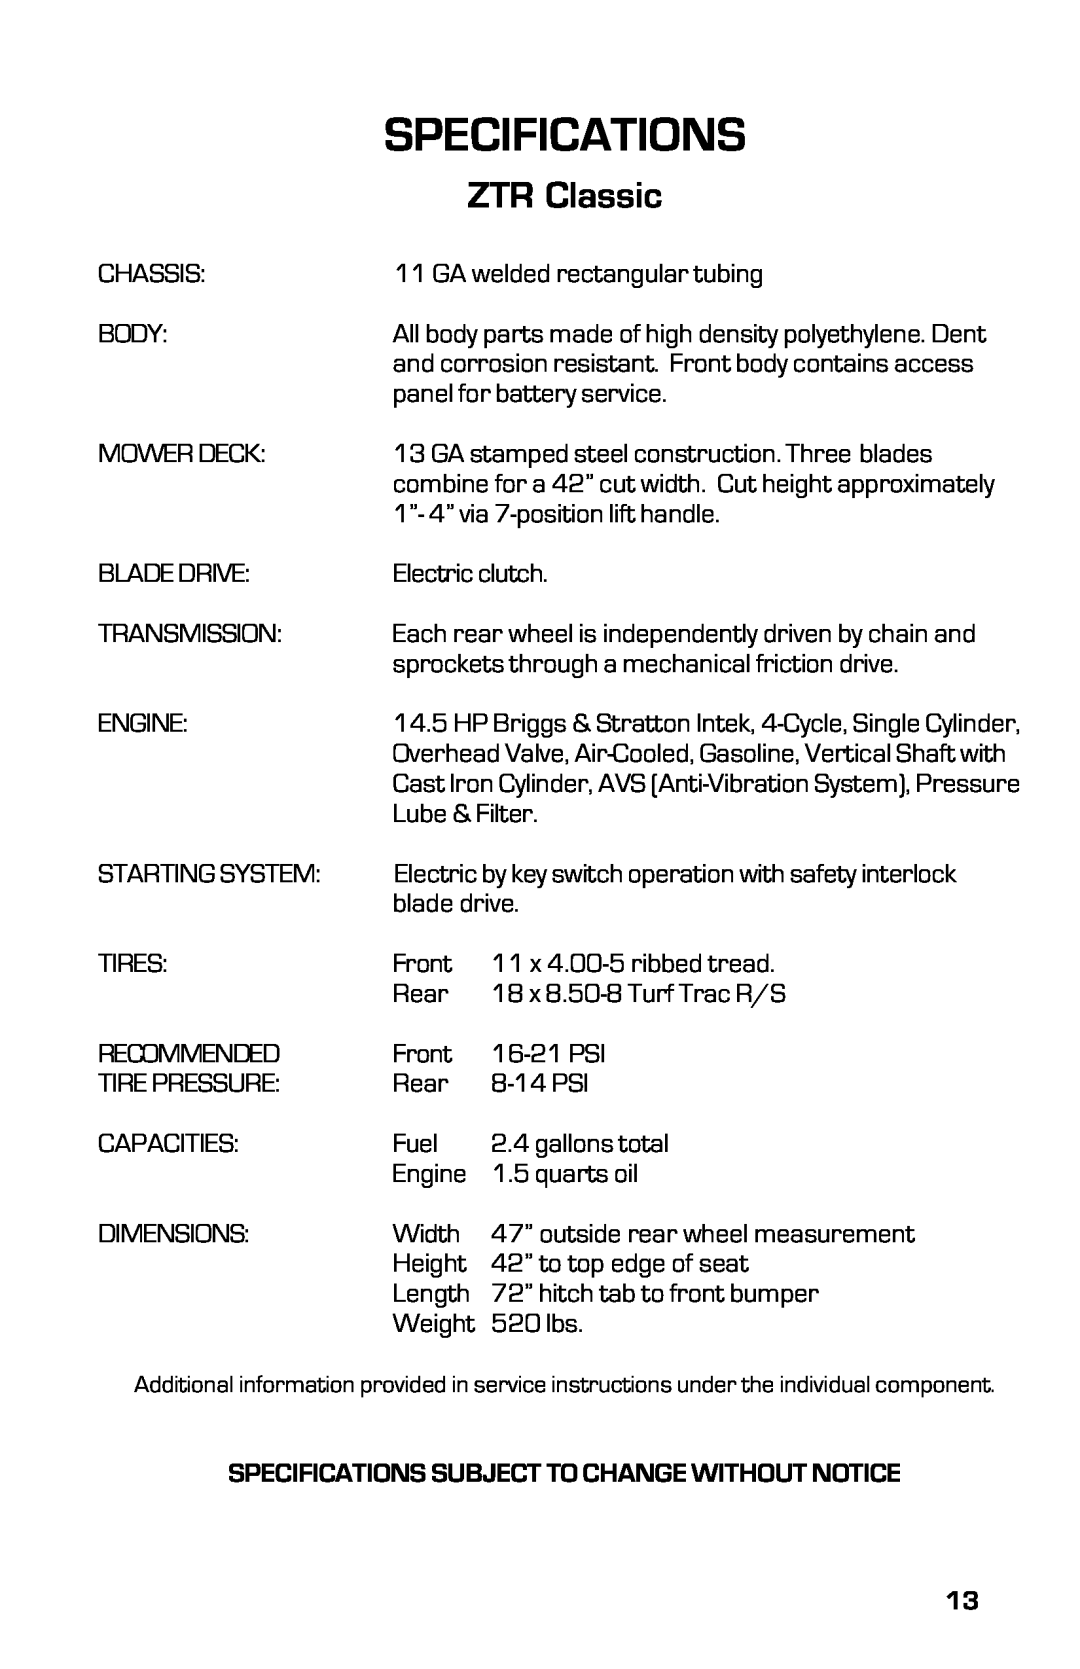 Dixon ZTRCLASSIC manual Specifications, ZTR Classic 